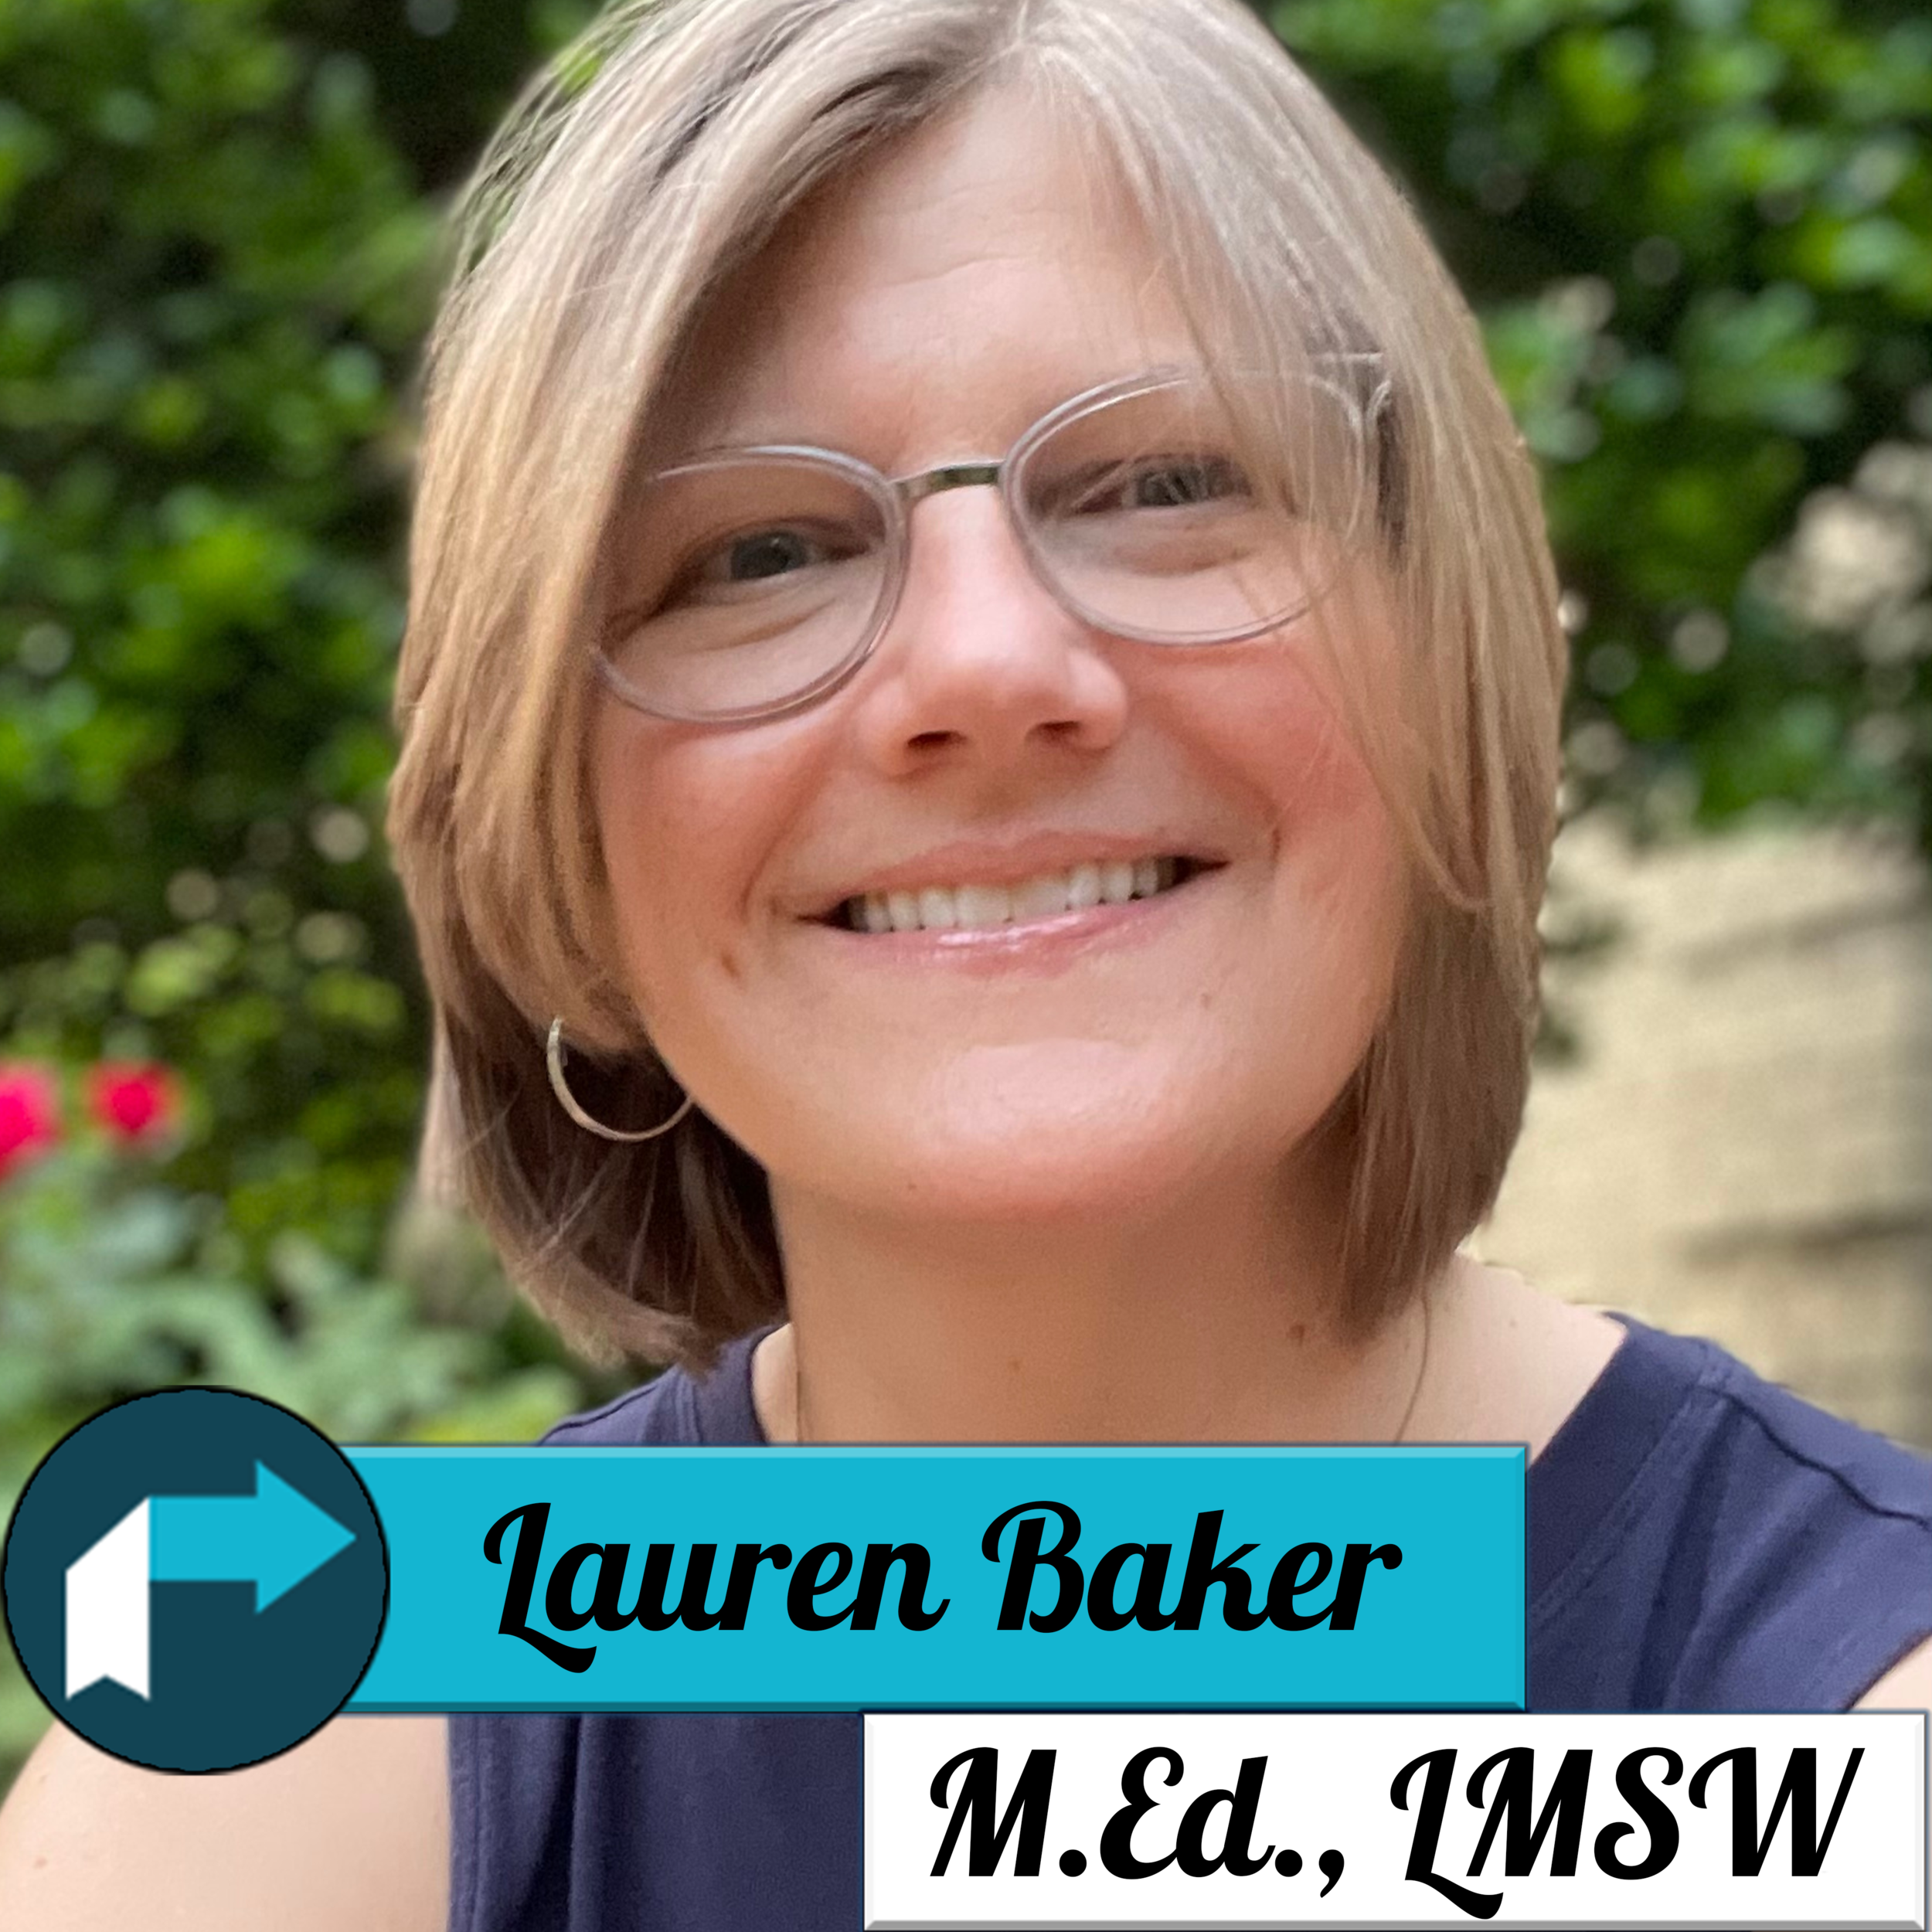 Lauren Baker, M.Ed., LMSW 